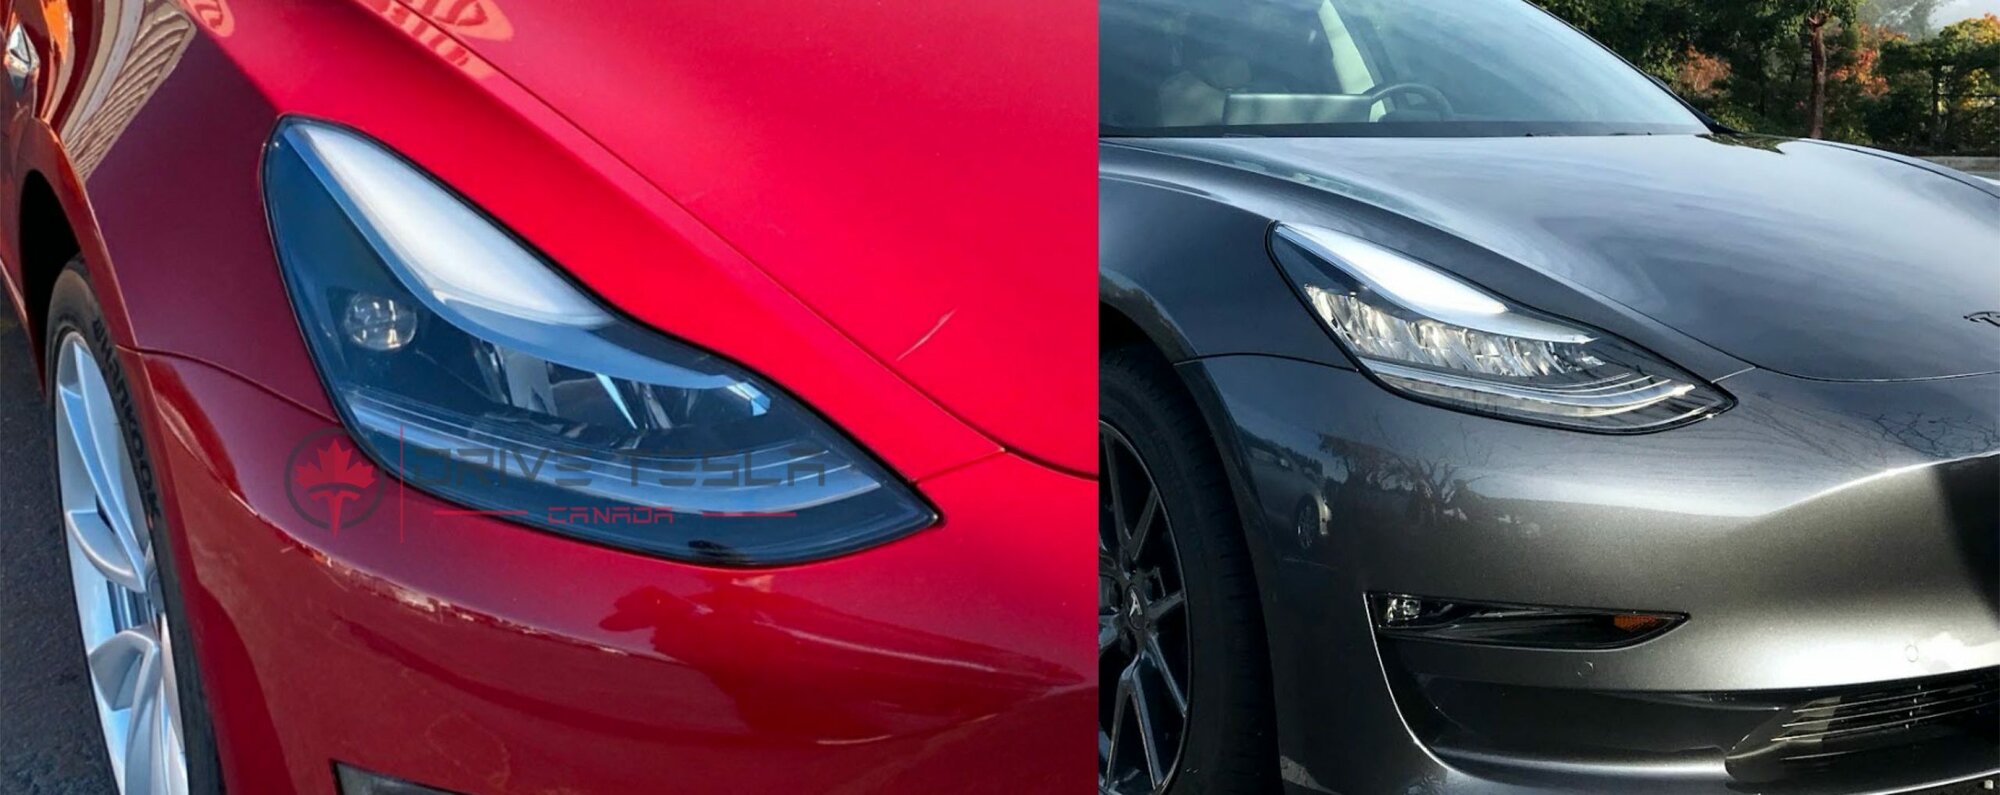 New-vs-old-Tesla-Model-3-headlights-scaled.jpeg